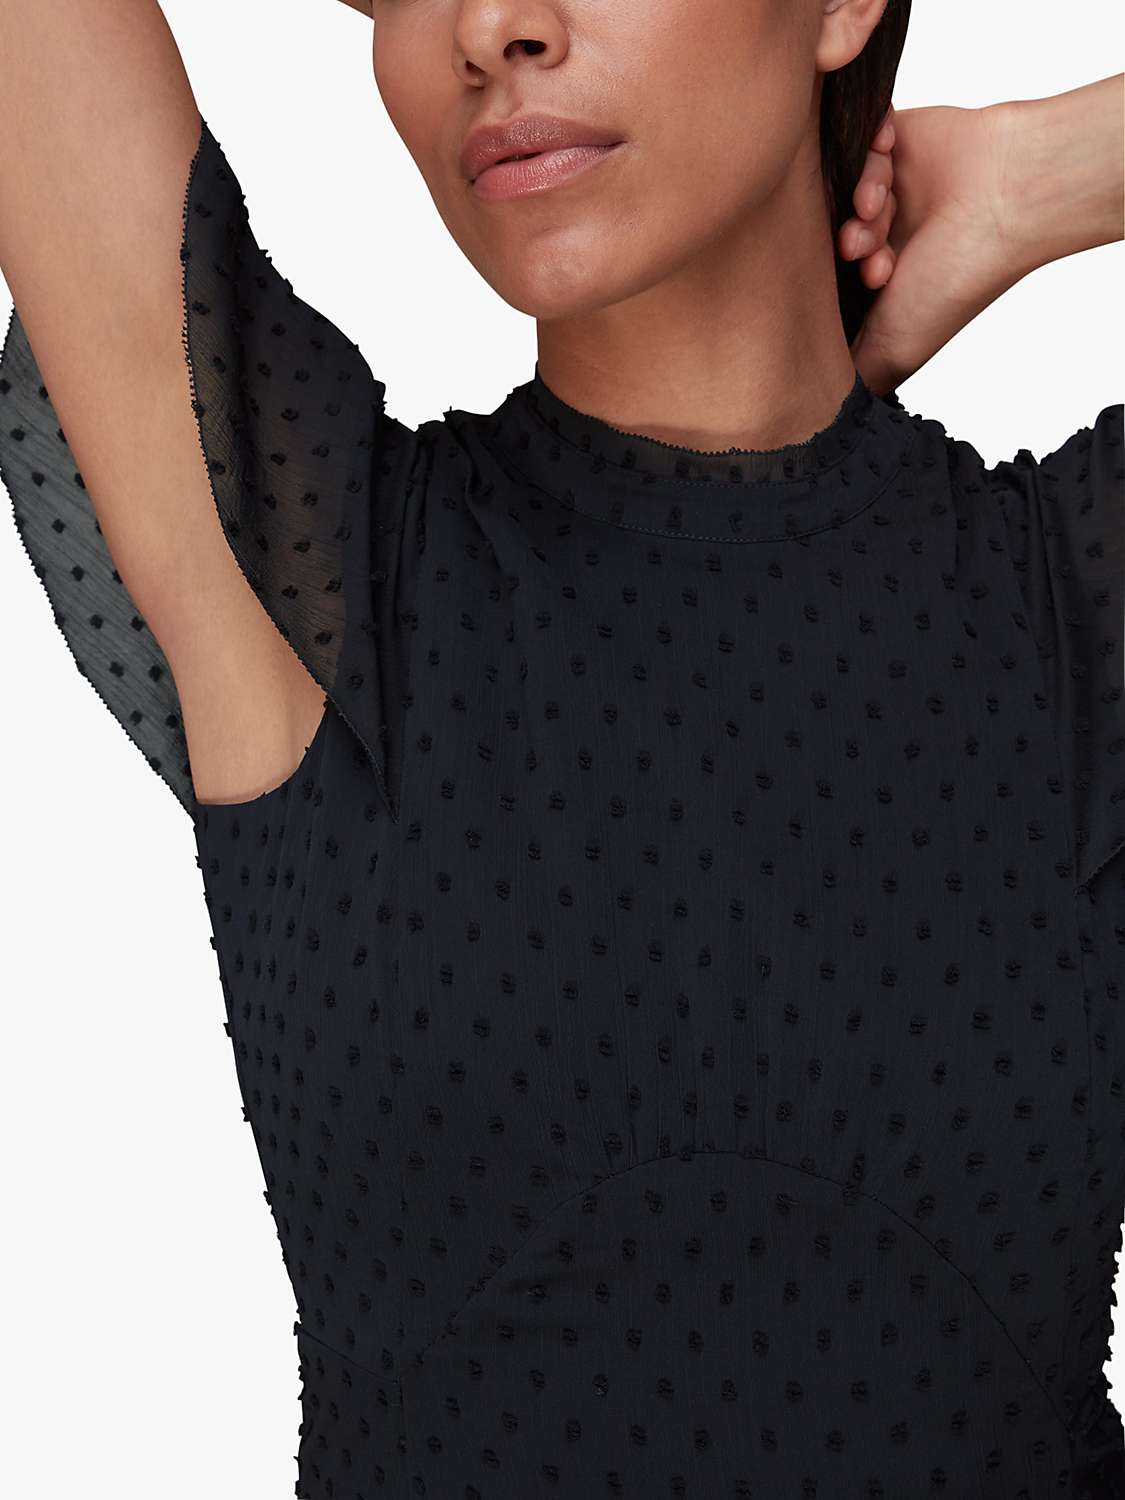 Buy Whistles Eloise Textured Cap Sleeve Midi Dress, Navy Online at johnlewis.com